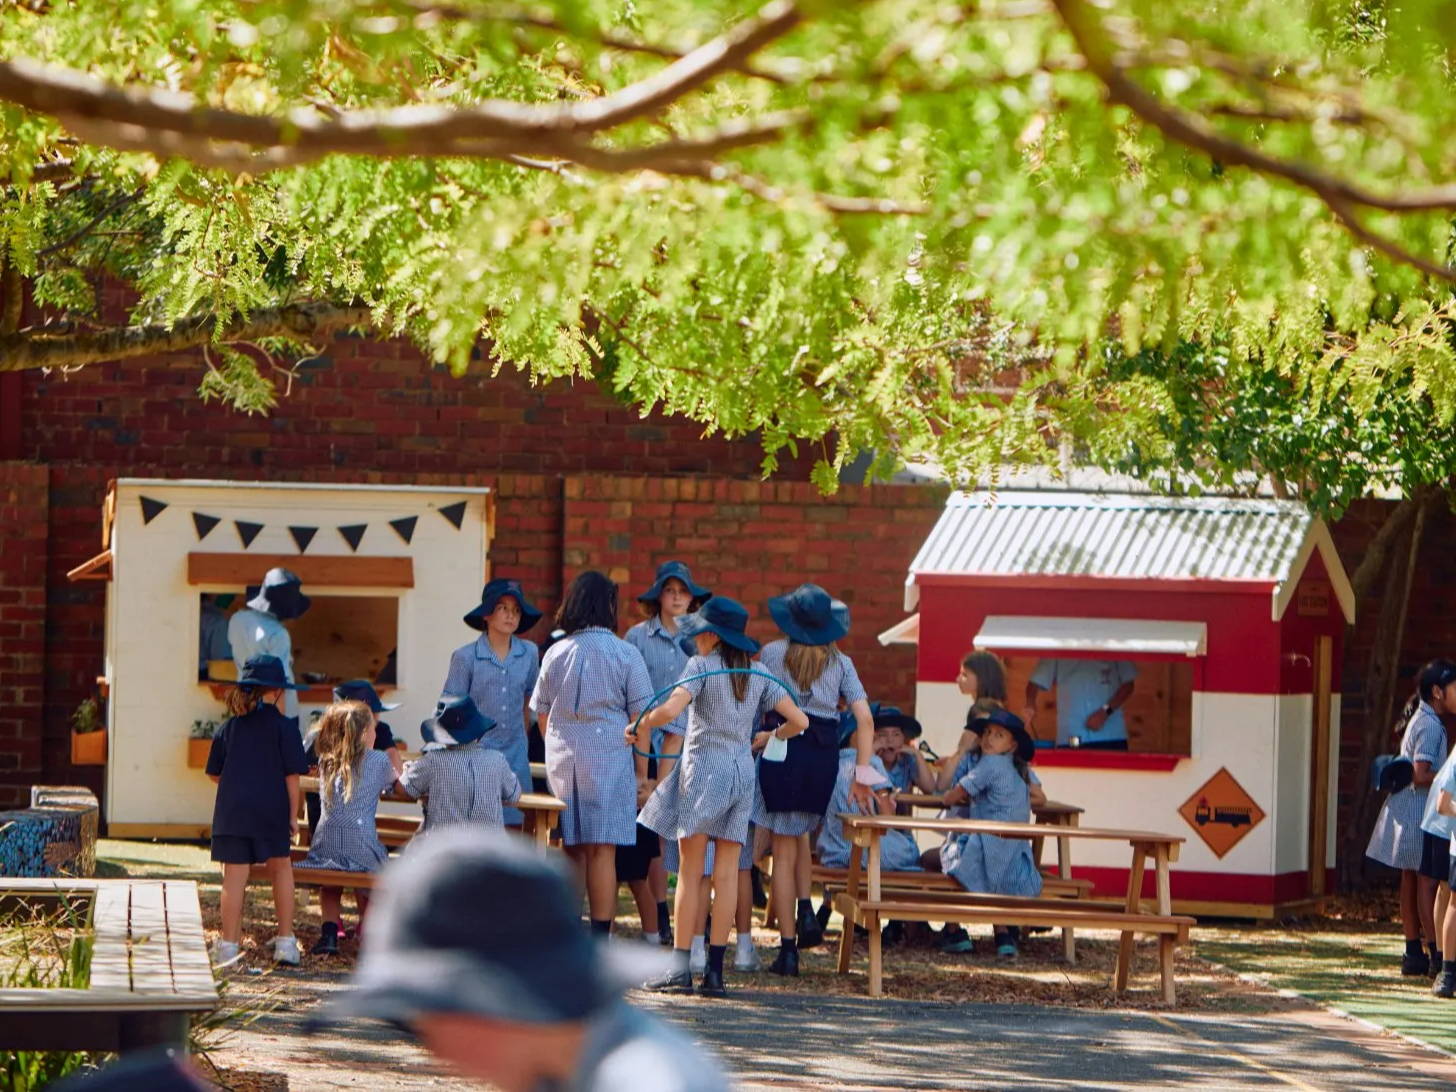 A temed cubby hosue village to transit kindergarten to primary school.